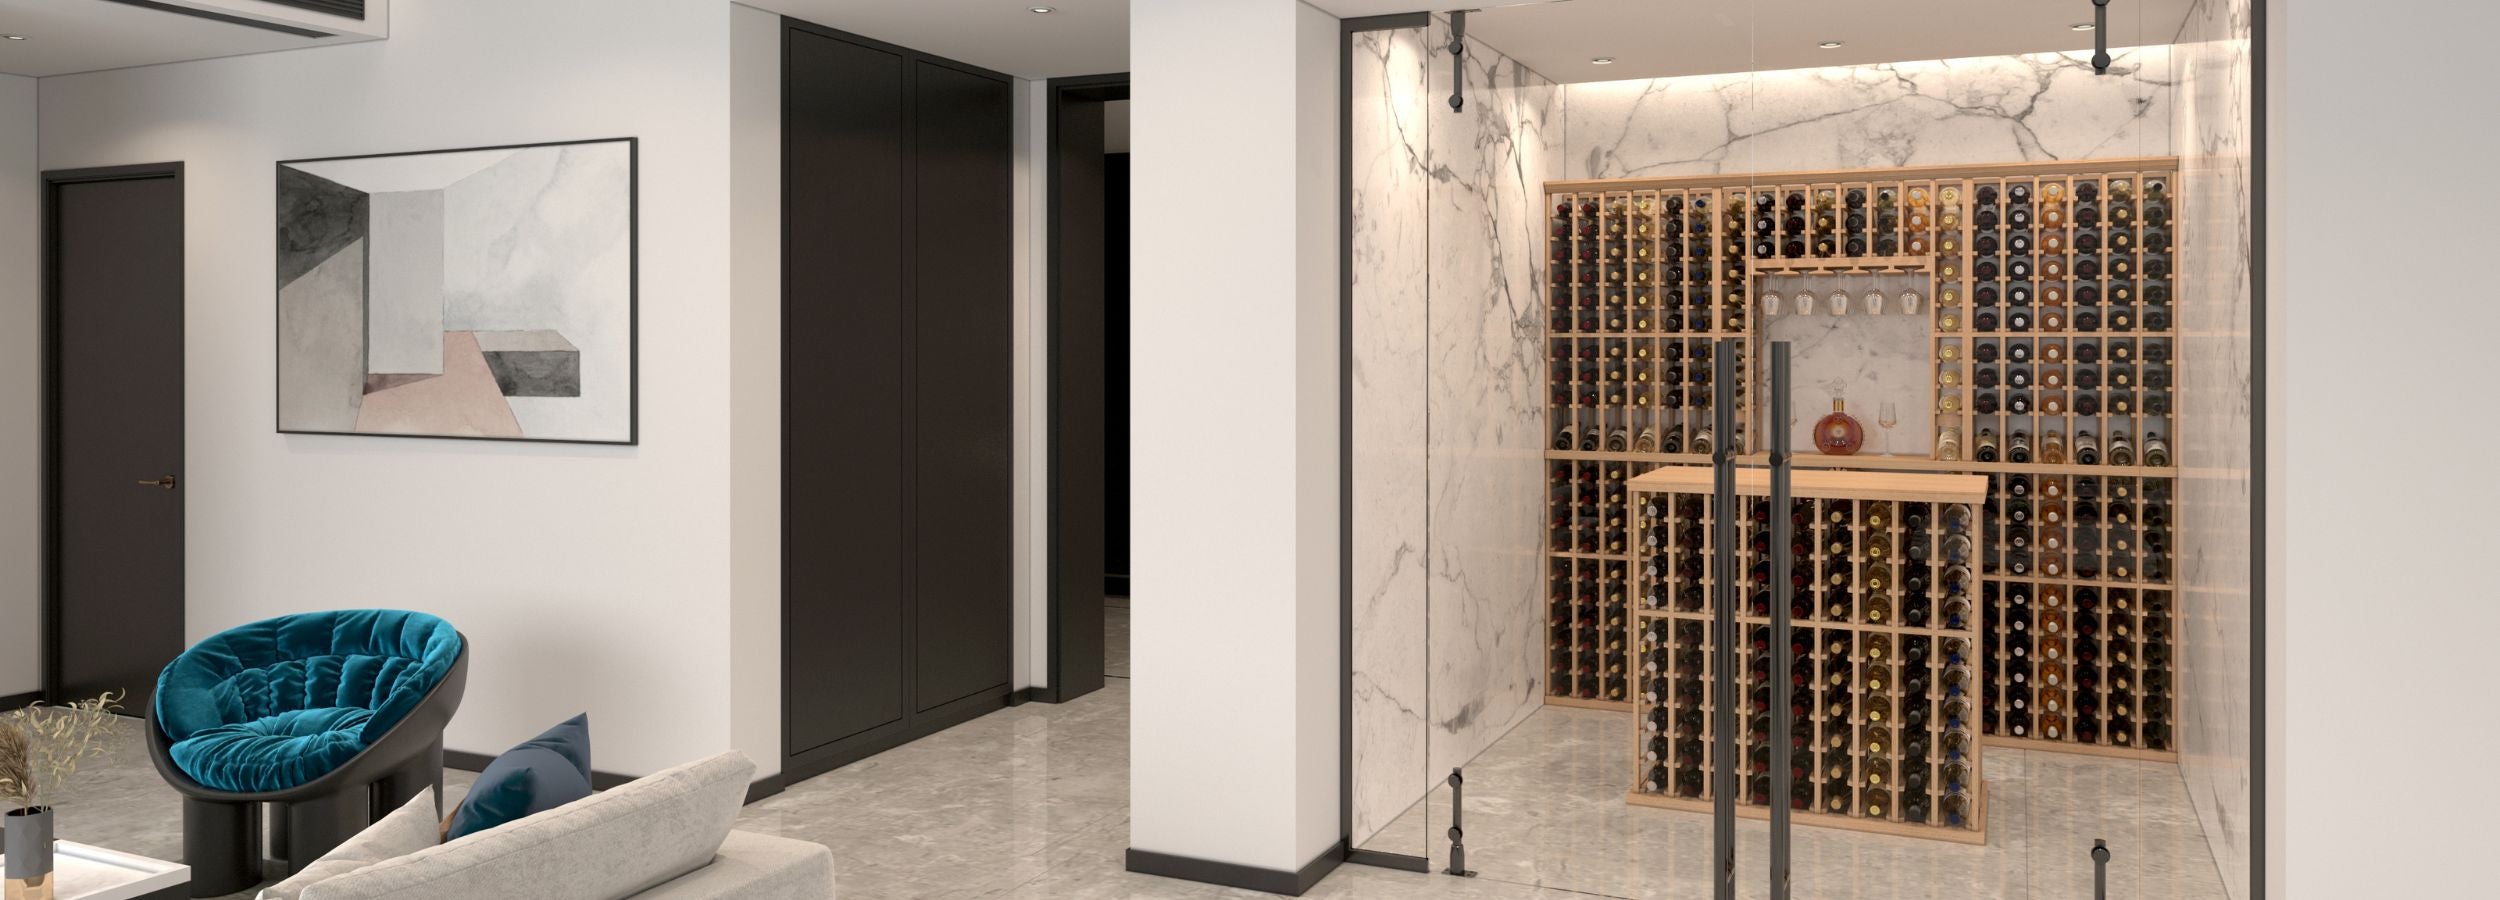 how to organize a wine cellar - wine cellar display ideas